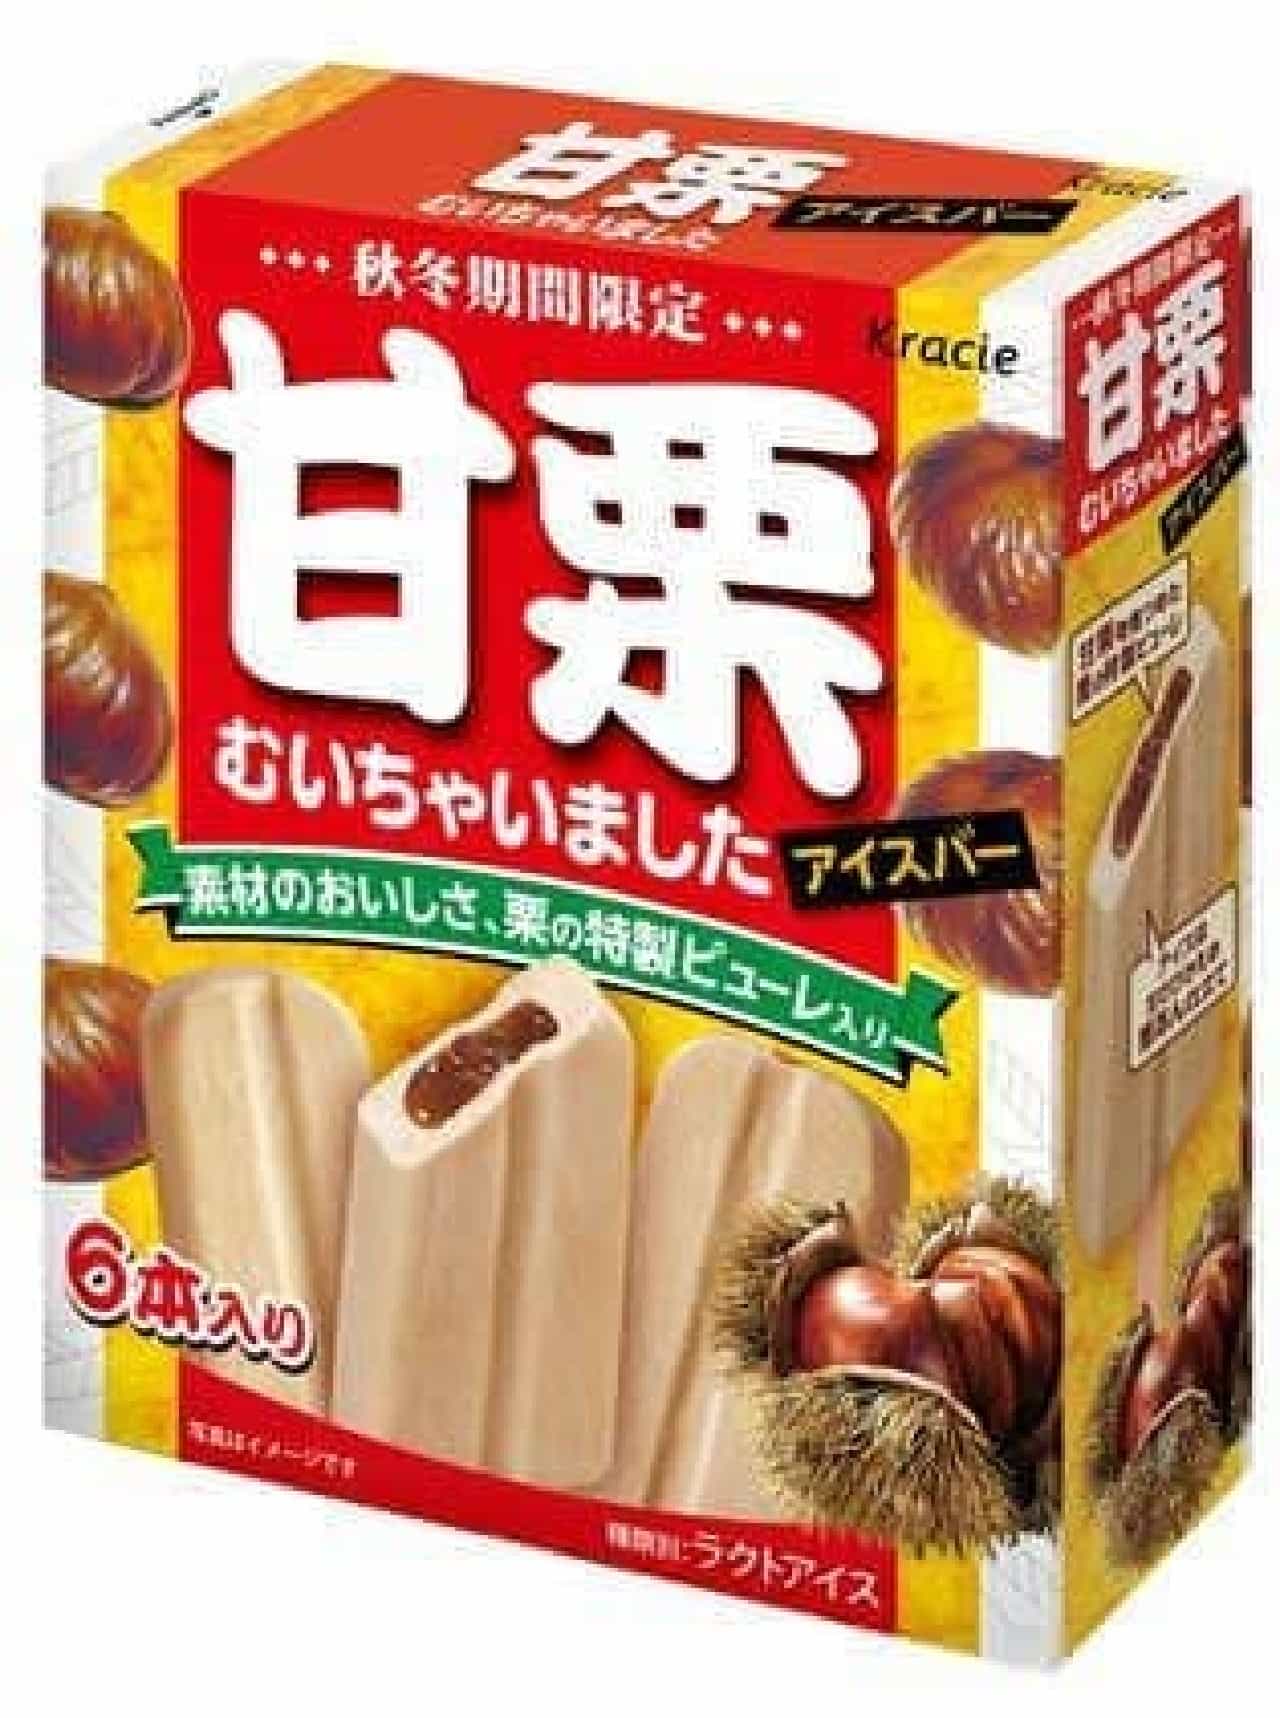 Kracie Foods "Amaguri Muchaita Ice Bar"